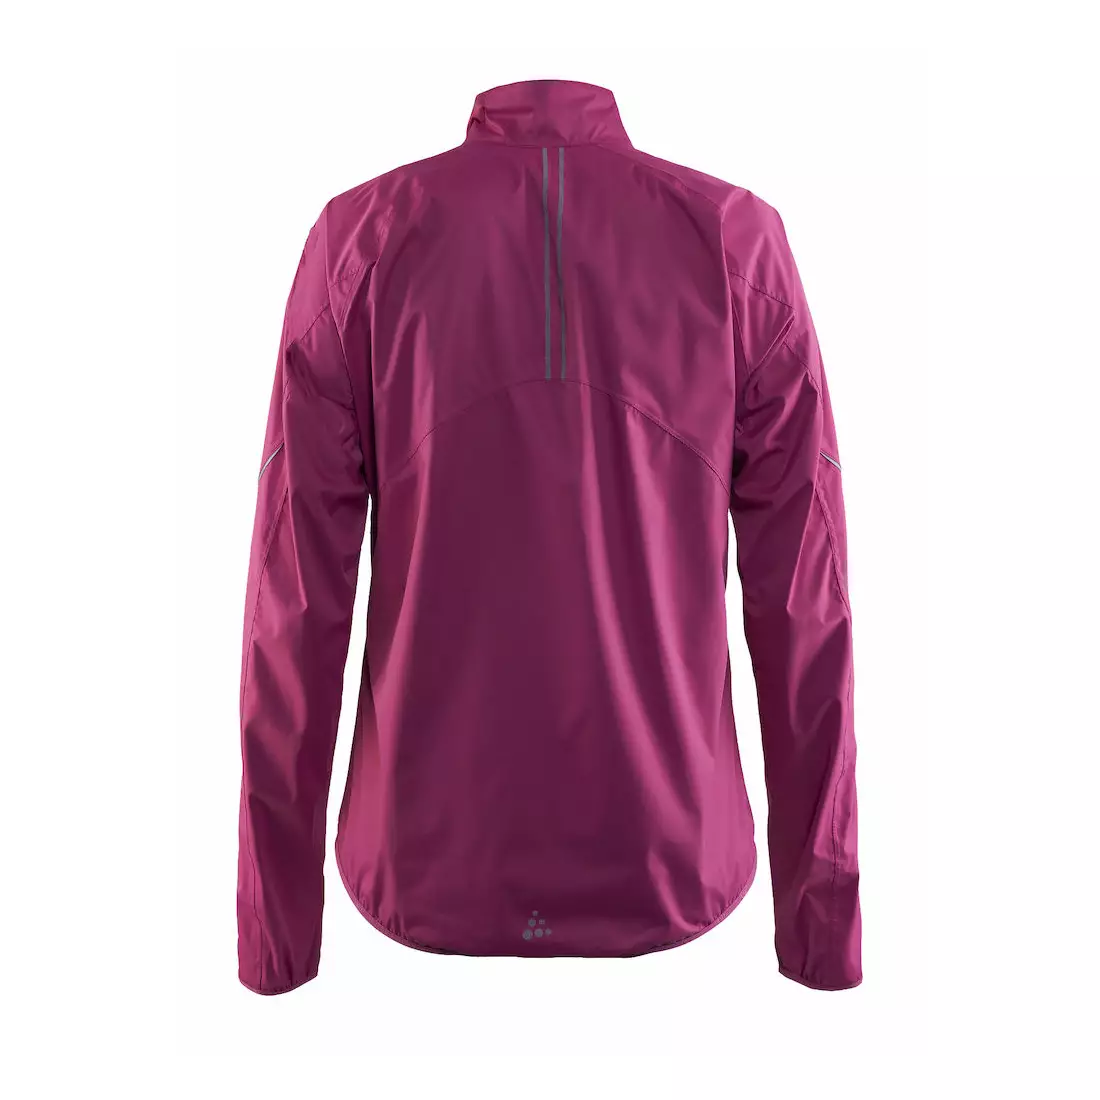 CRAFT VELO women's lightweight rainproof cycling jacket 1904431-1403